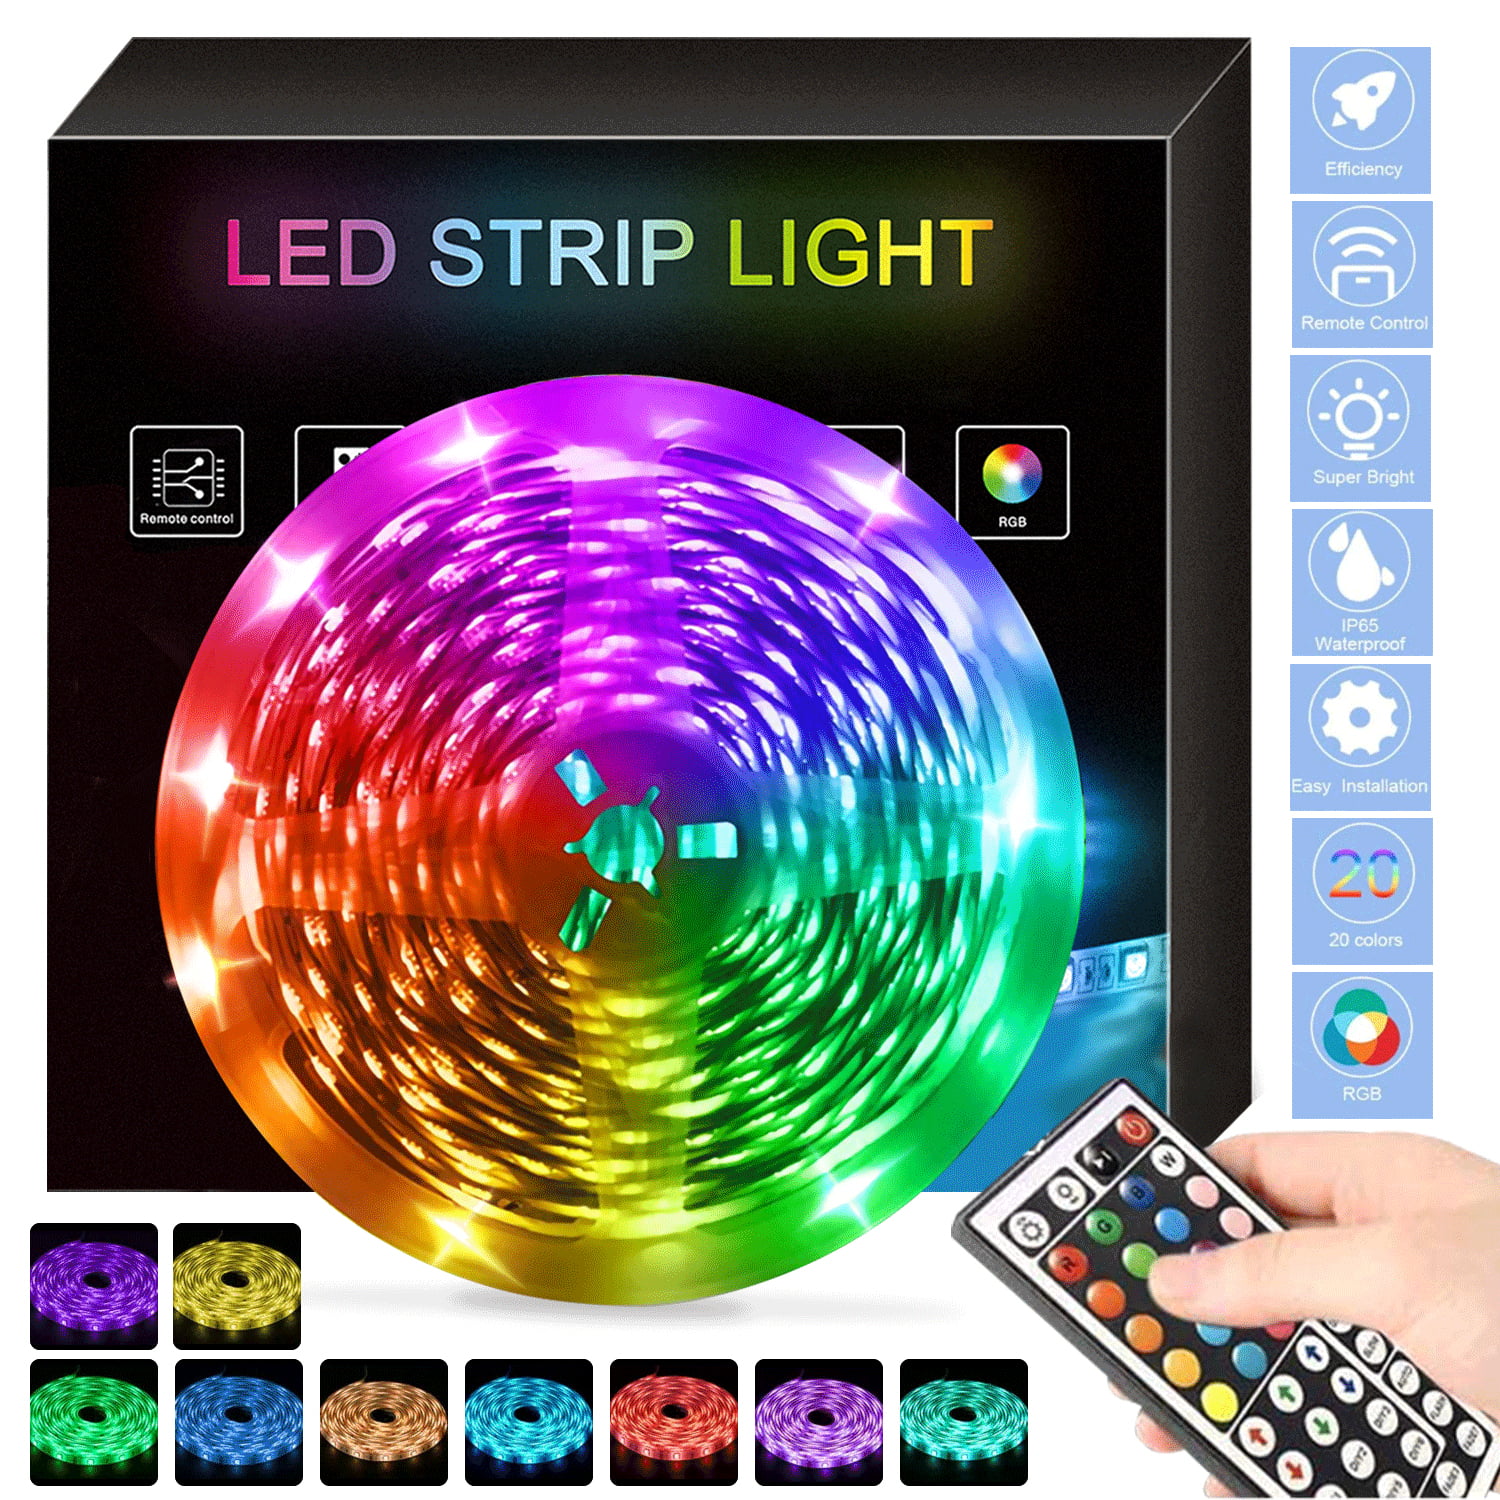 Details about   5M Flexible LED Light Strip W/ Remote Controller Festival Party Home Club Decor 